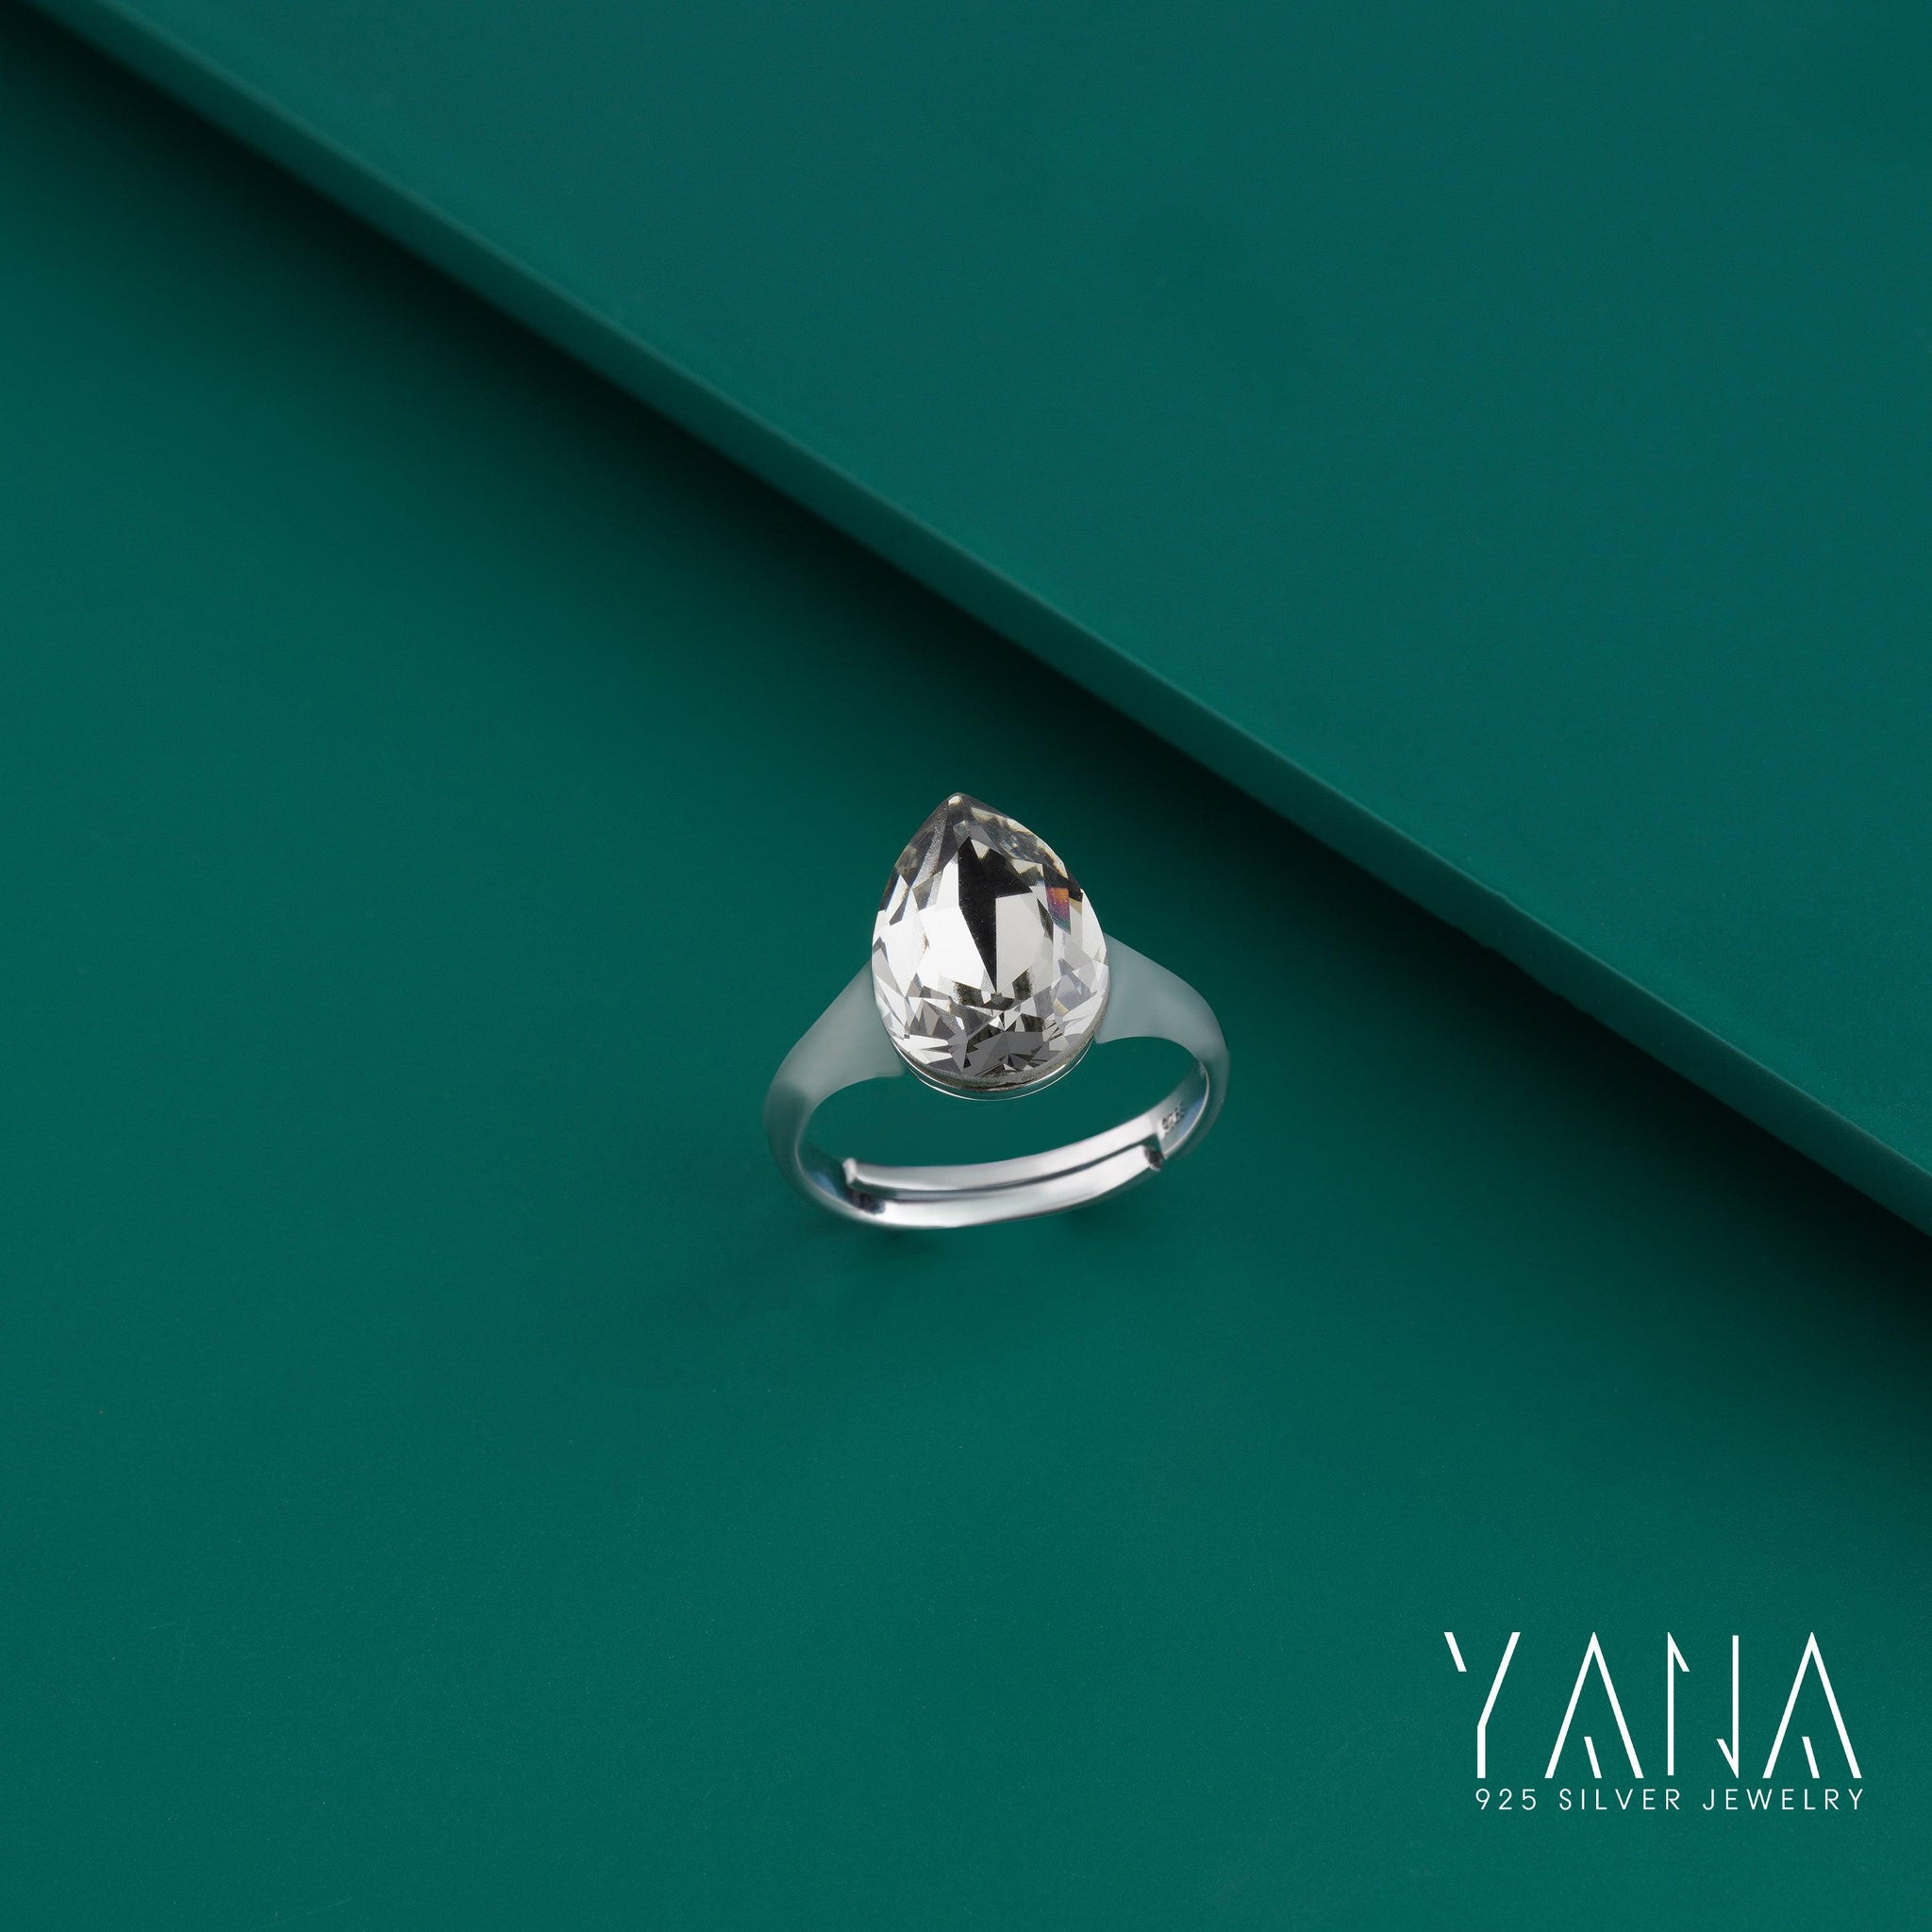 Stunning Swarovski Pear Shaped Crystal Adjustable Ring In 925 Silver - YANA SILVER